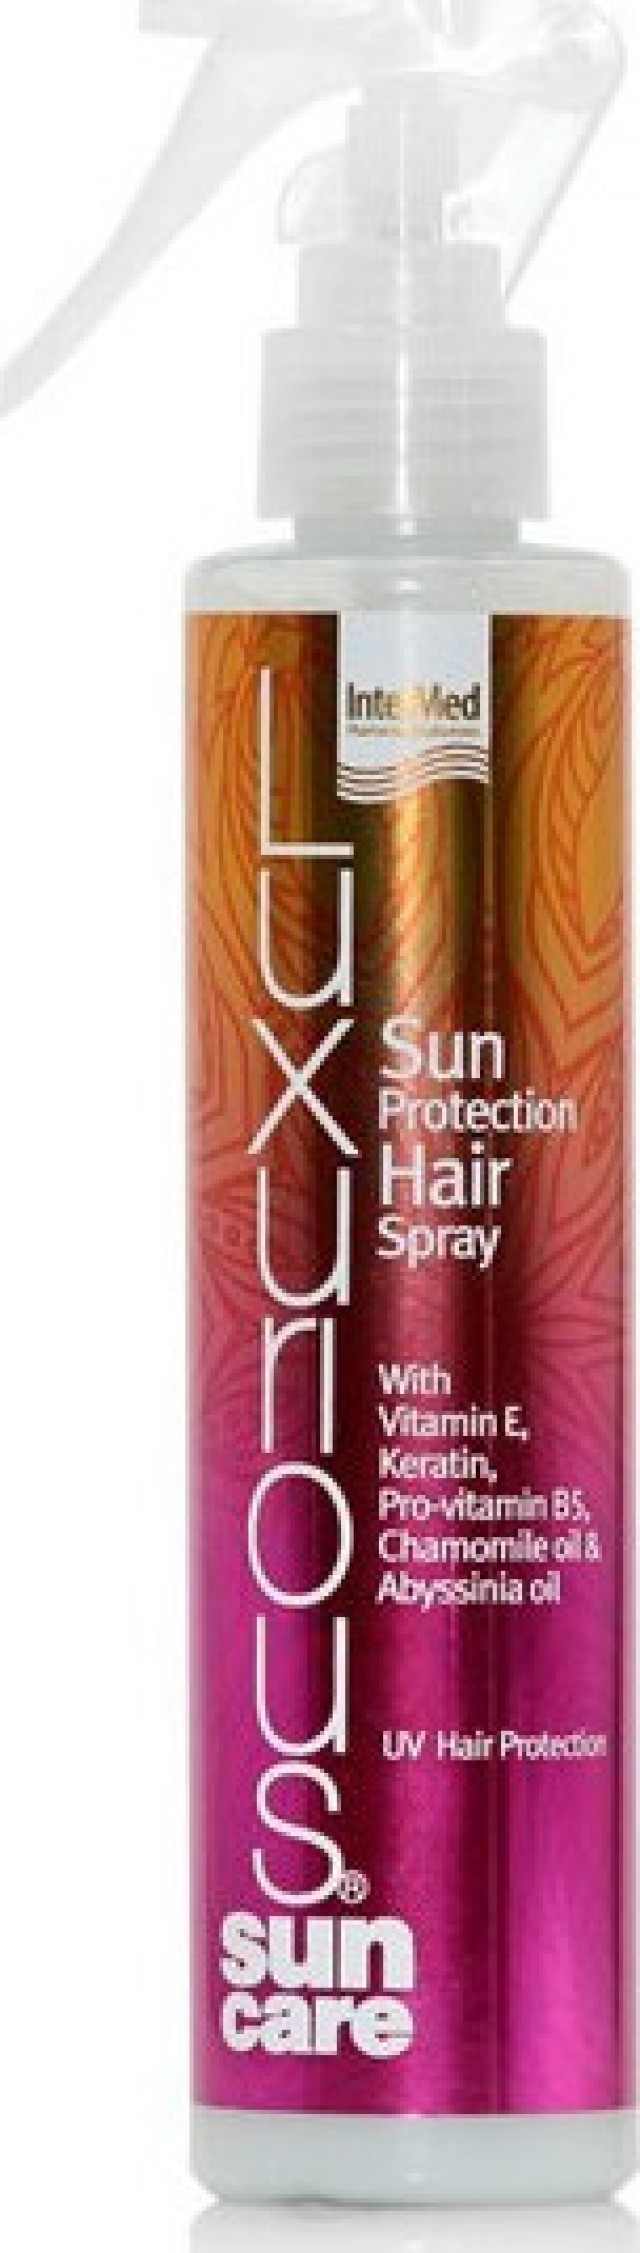 Intermed - Suncare Hair Protection Spray Αντηλιακό Σπρέι Μαλλιών 200ml